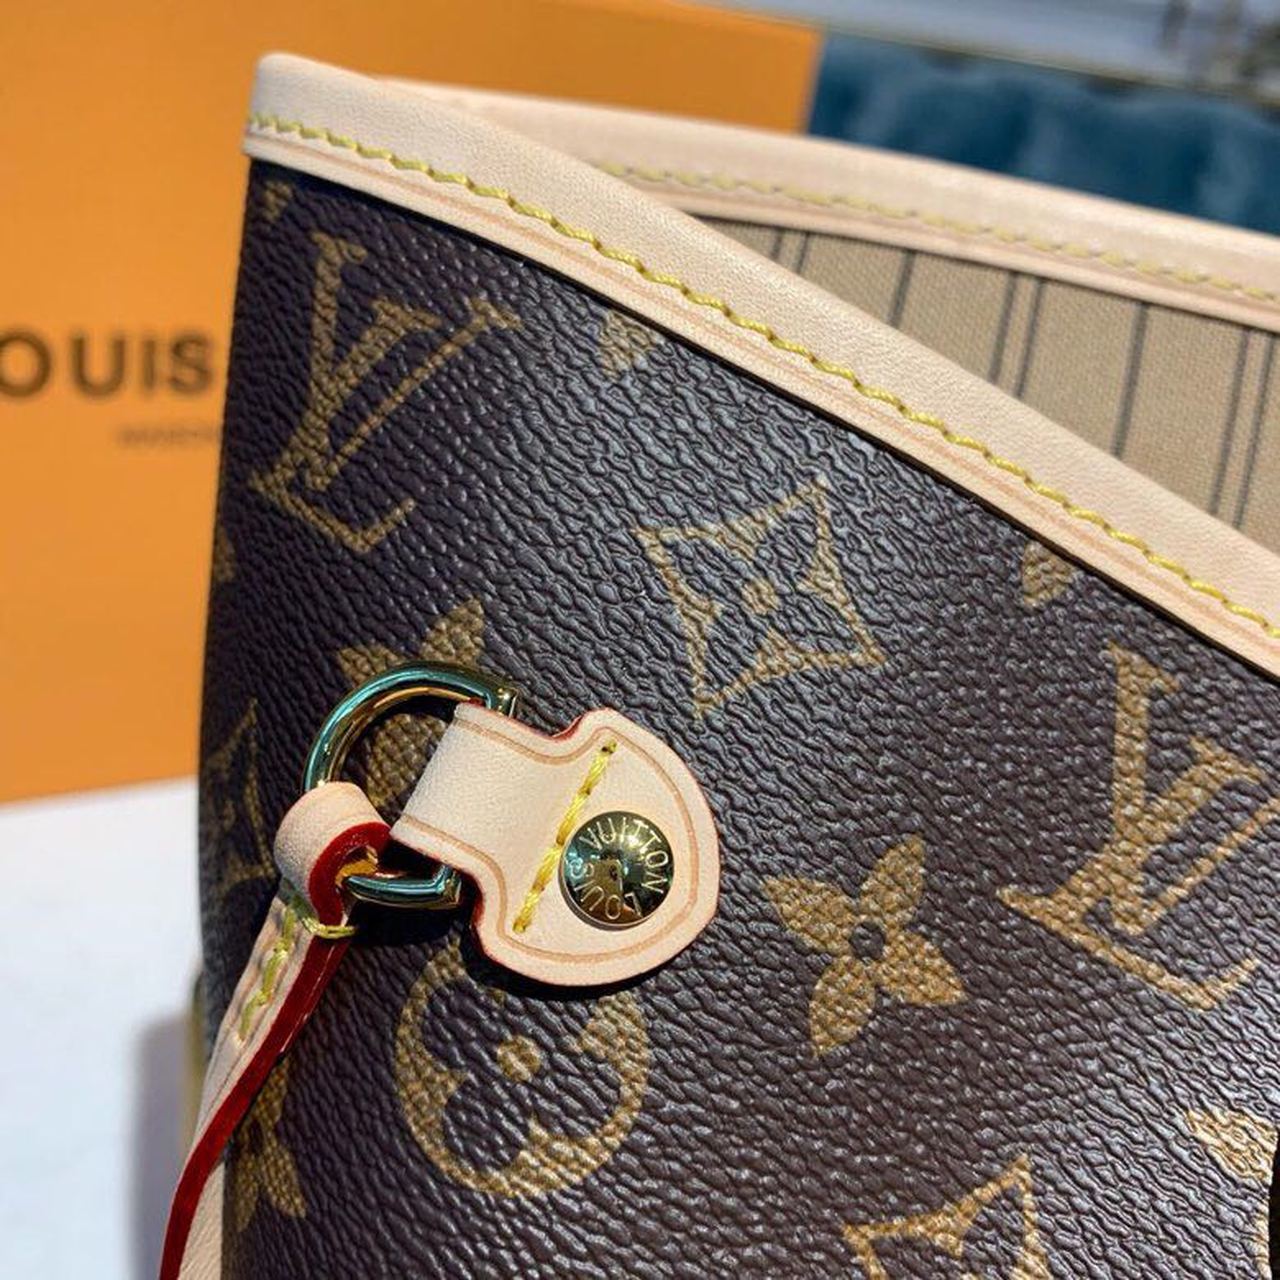 REP 1:1] Louis Vuitton Neverfull MM Tote Bag Monogram Canvas Brown